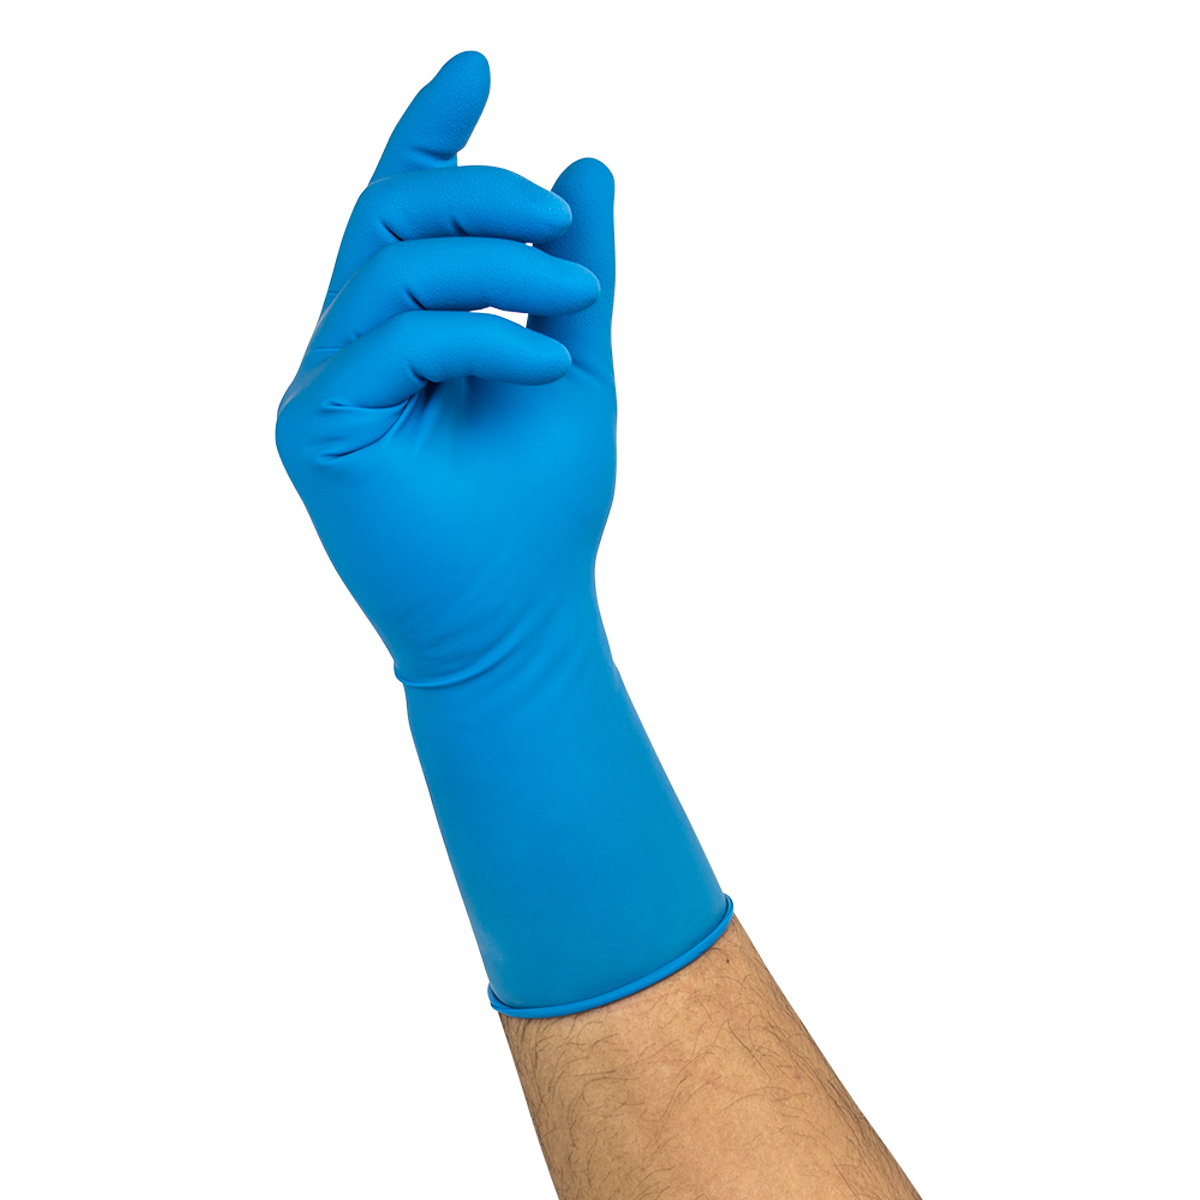 XL 50 per Box Microflex SG-375-XL Safegrip Exam Gloves Extended Cuff Pack of 500 Textured PF Latex Blue 10 Box per Case